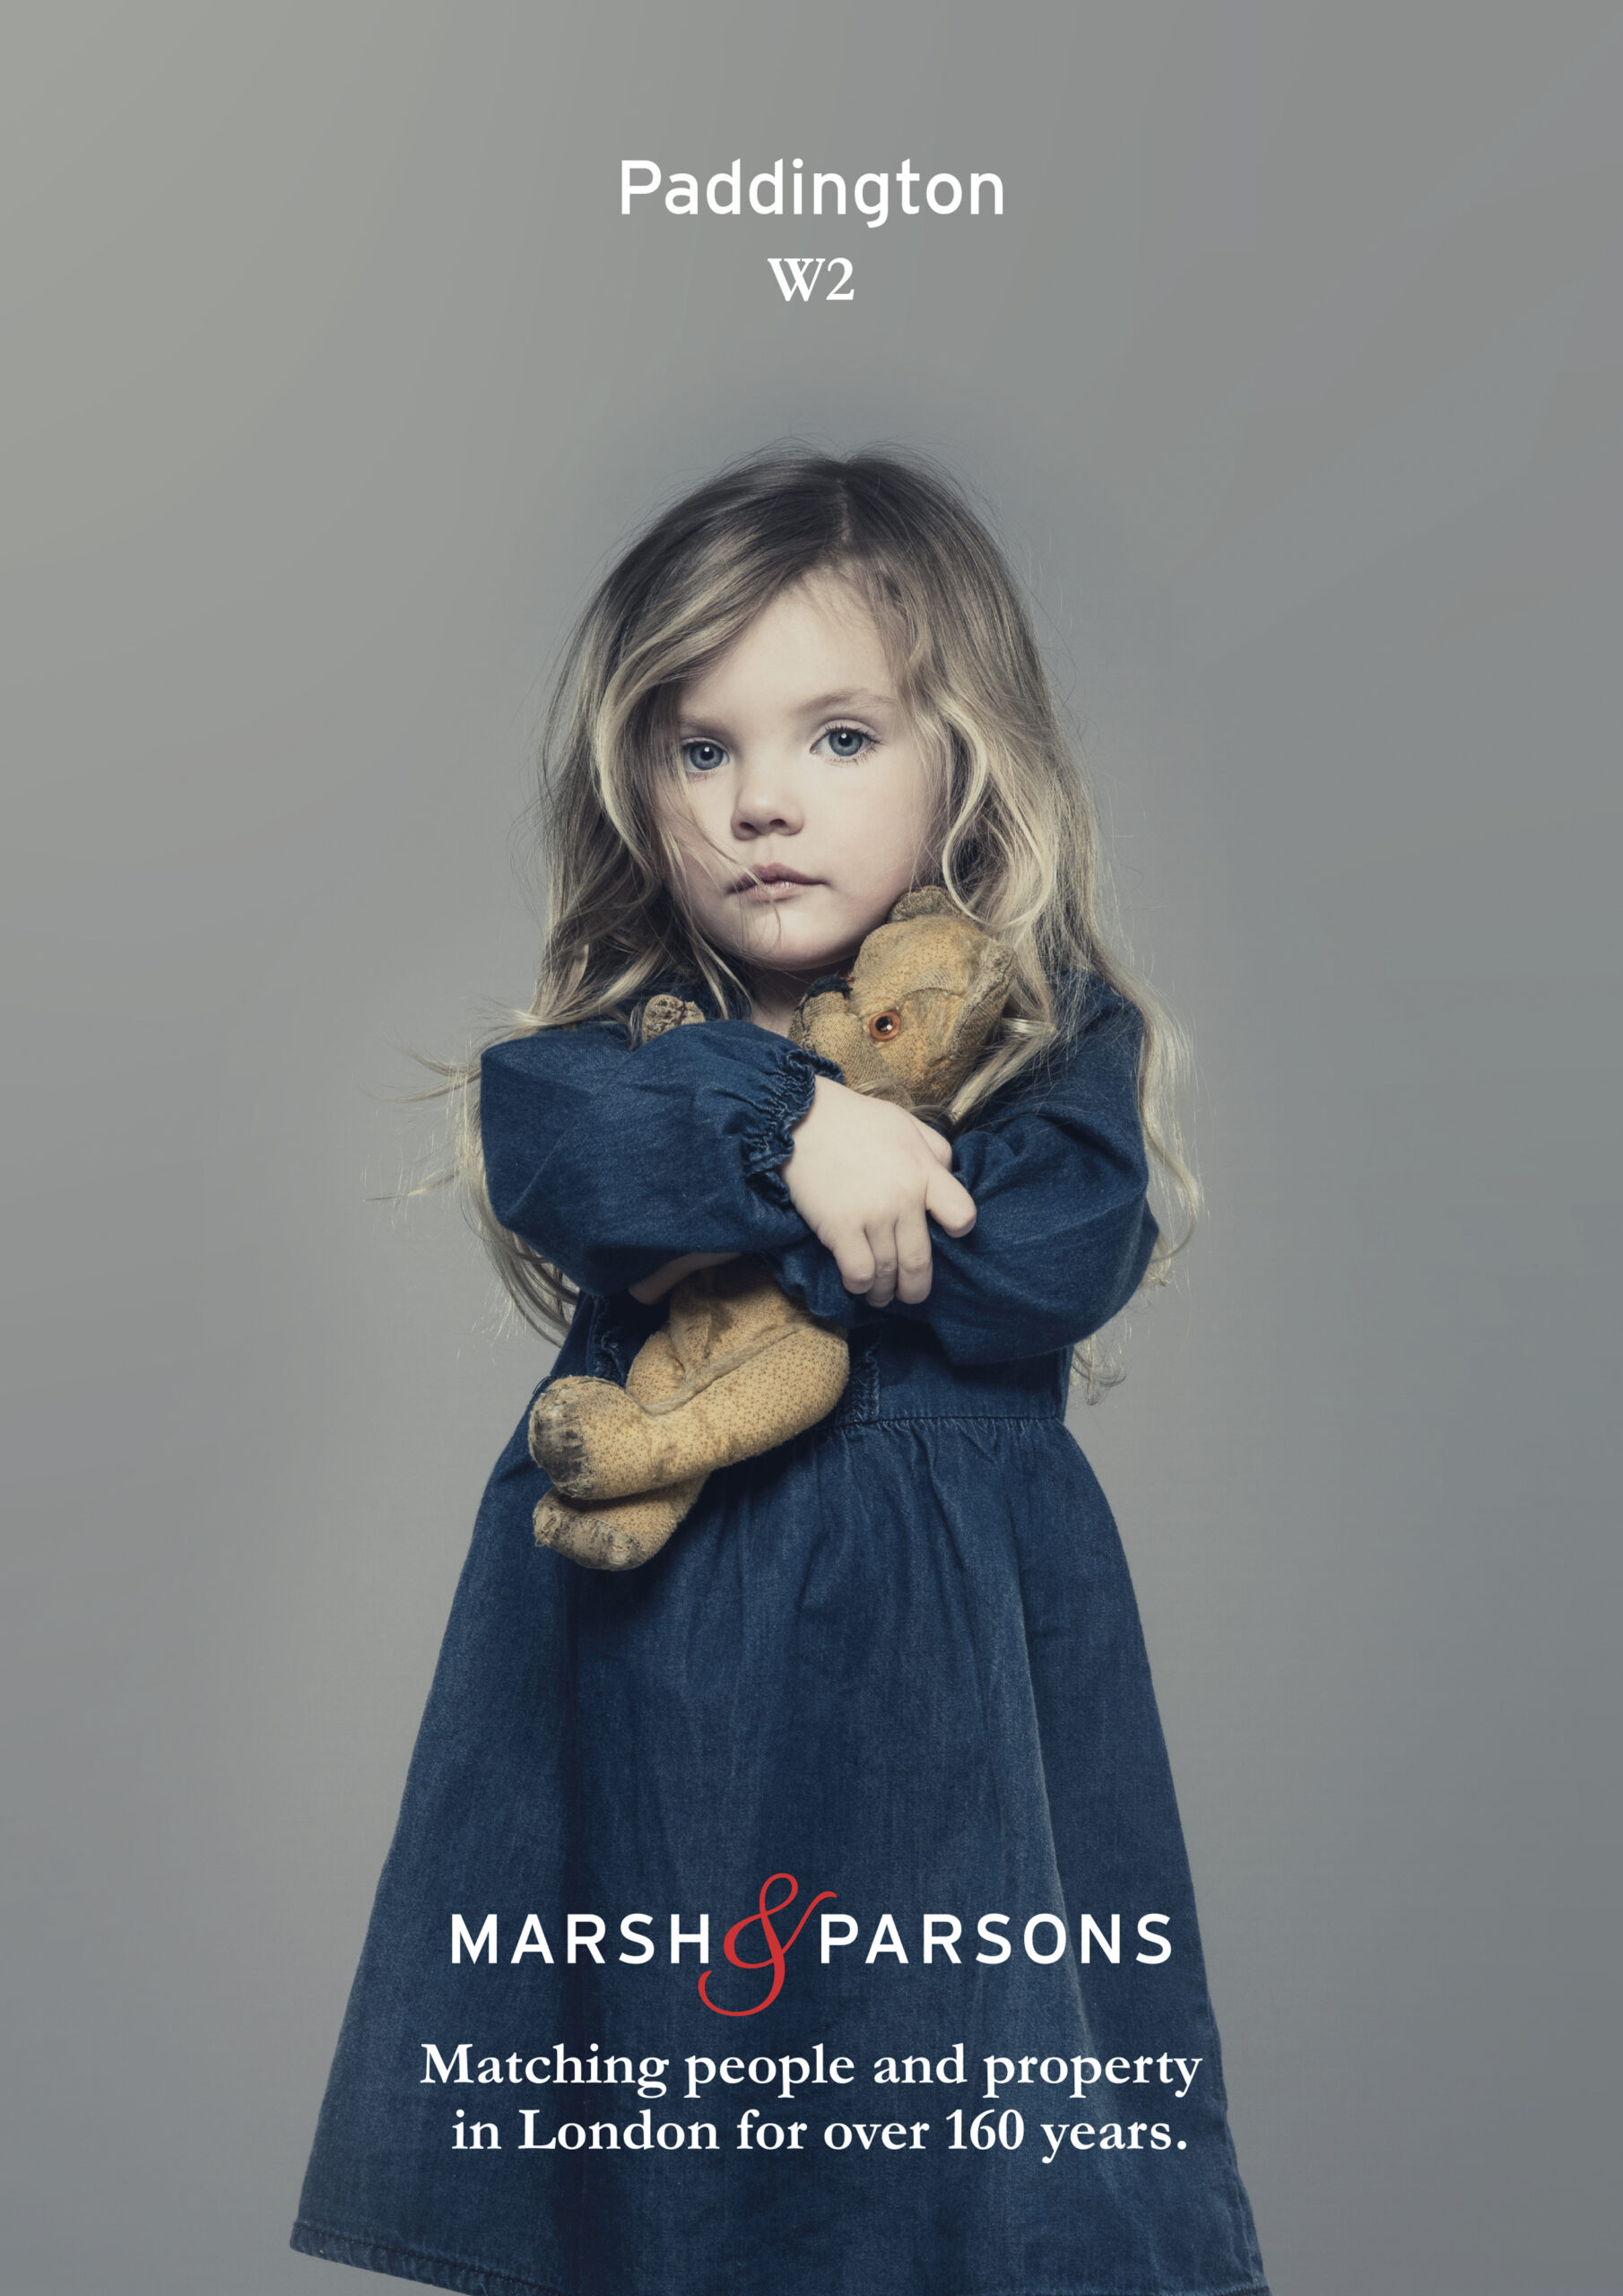 poster with girl holding teddy bear, caption say's Paddington - Brand - Marsh & Parsons